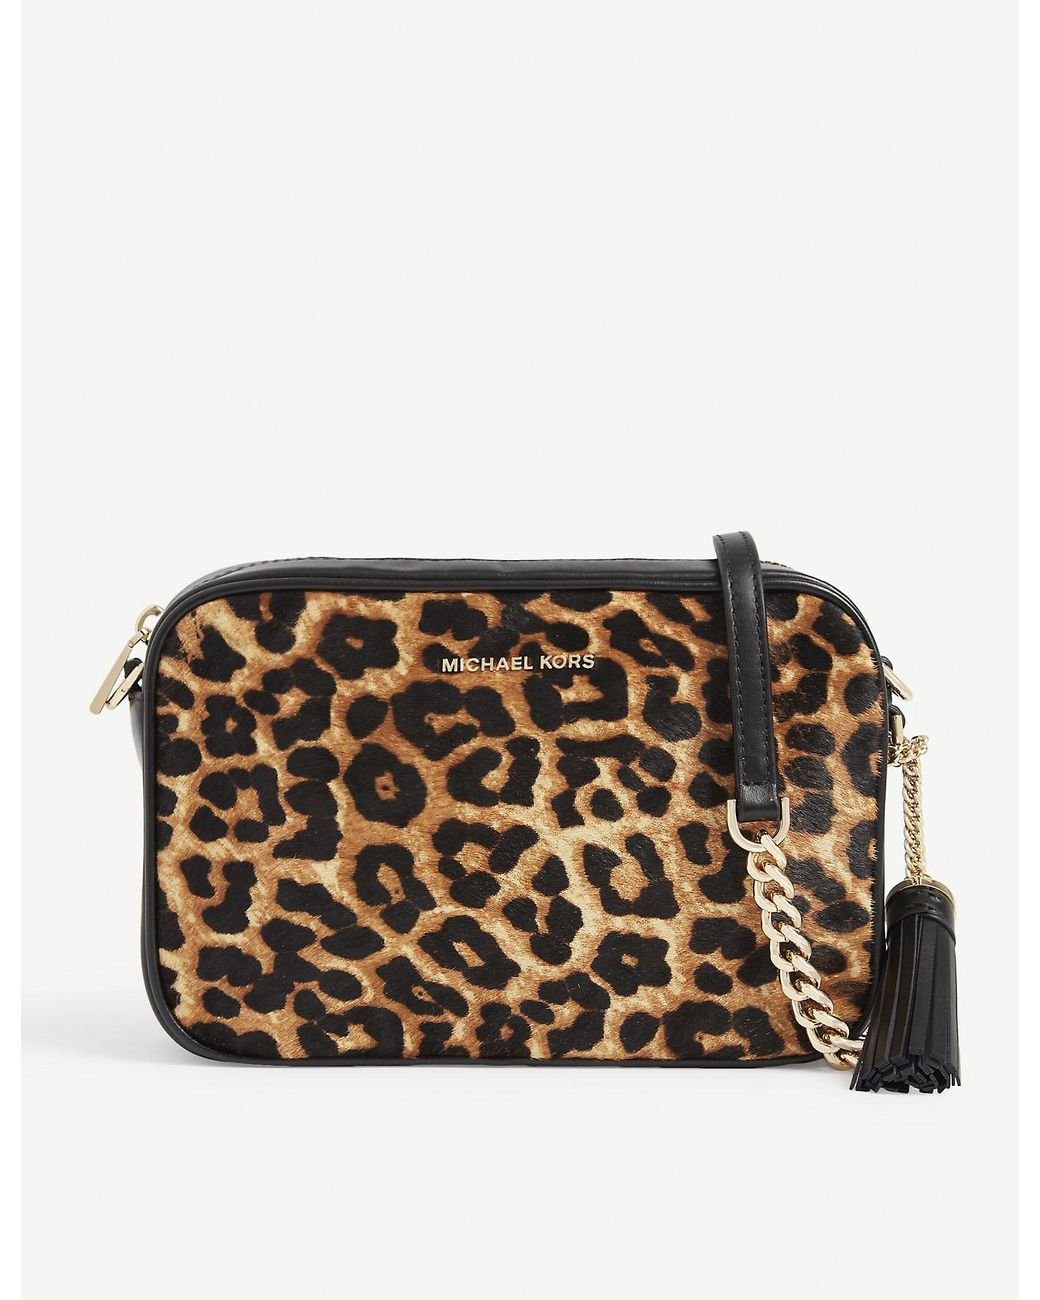 MICHAEL Kors Ginny Leopard Cross-body Bag